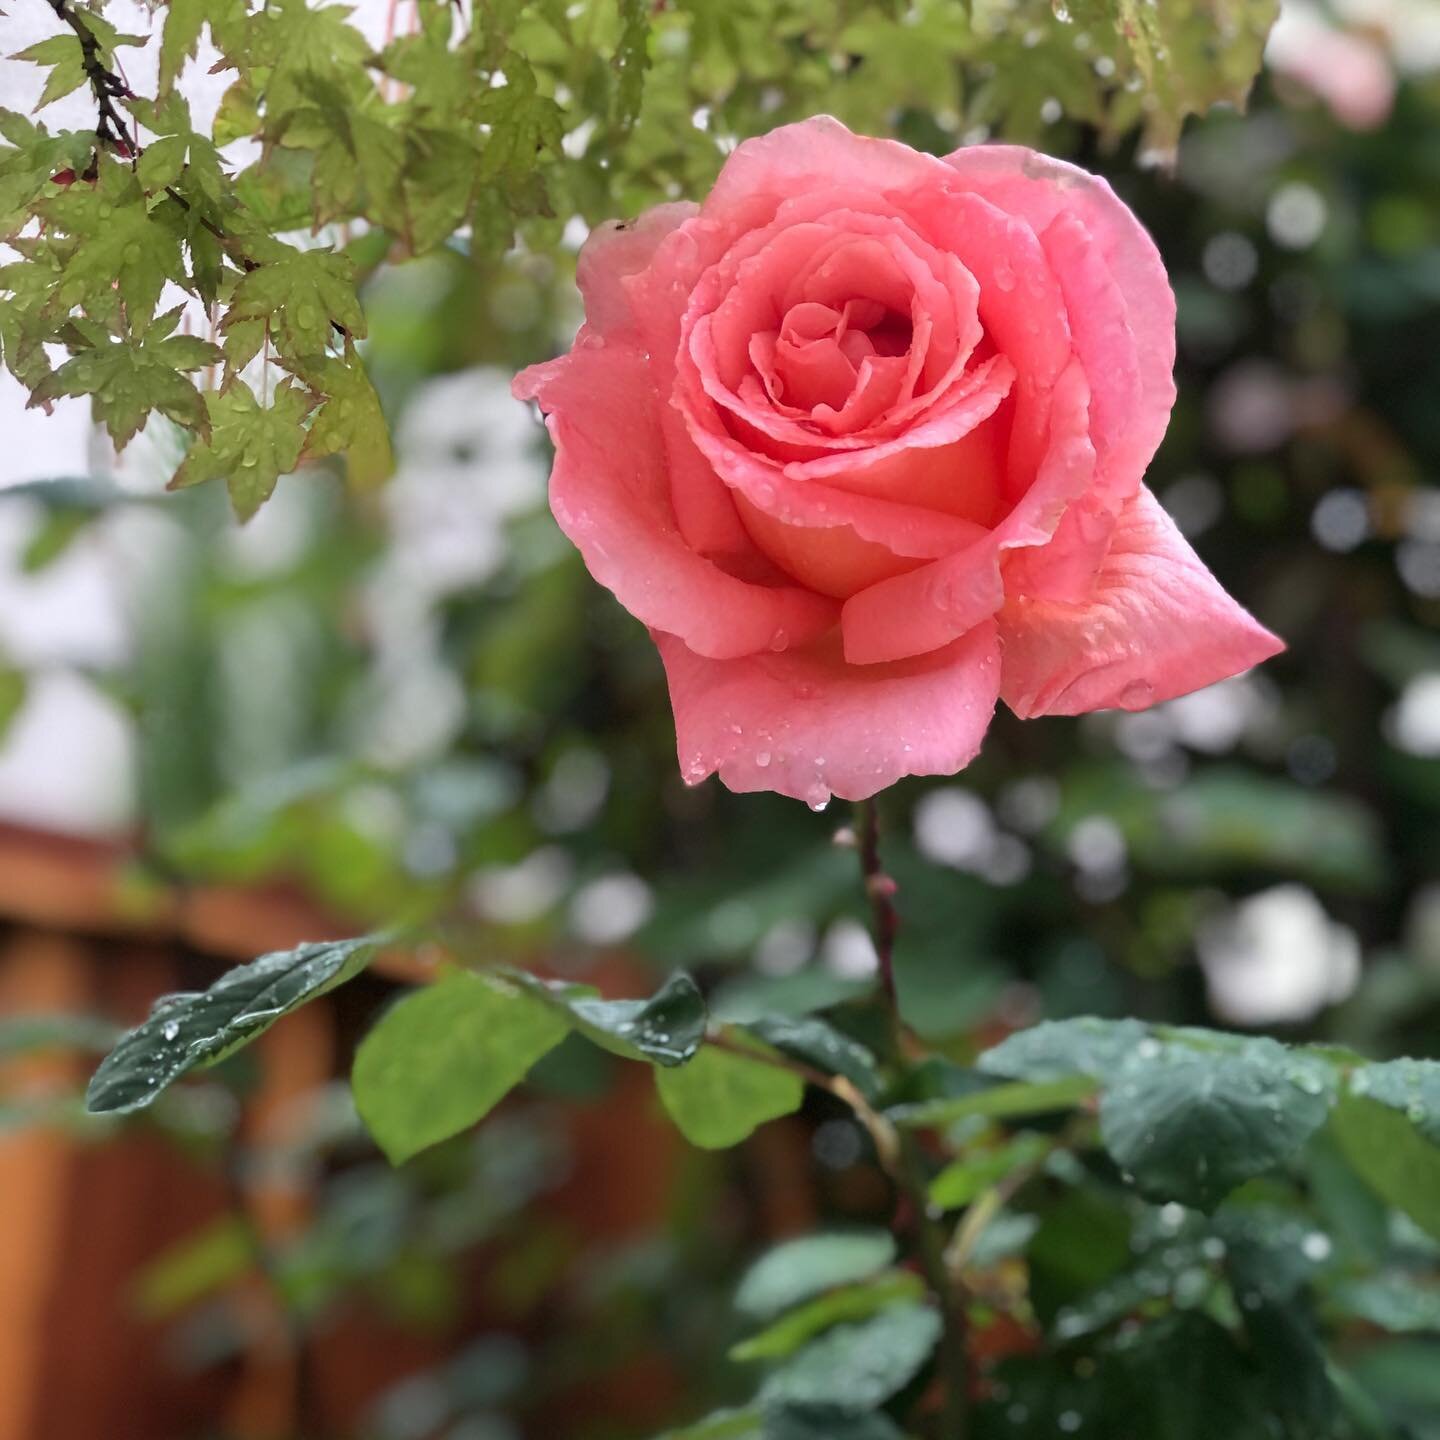 Raindrops on roses. ❤️